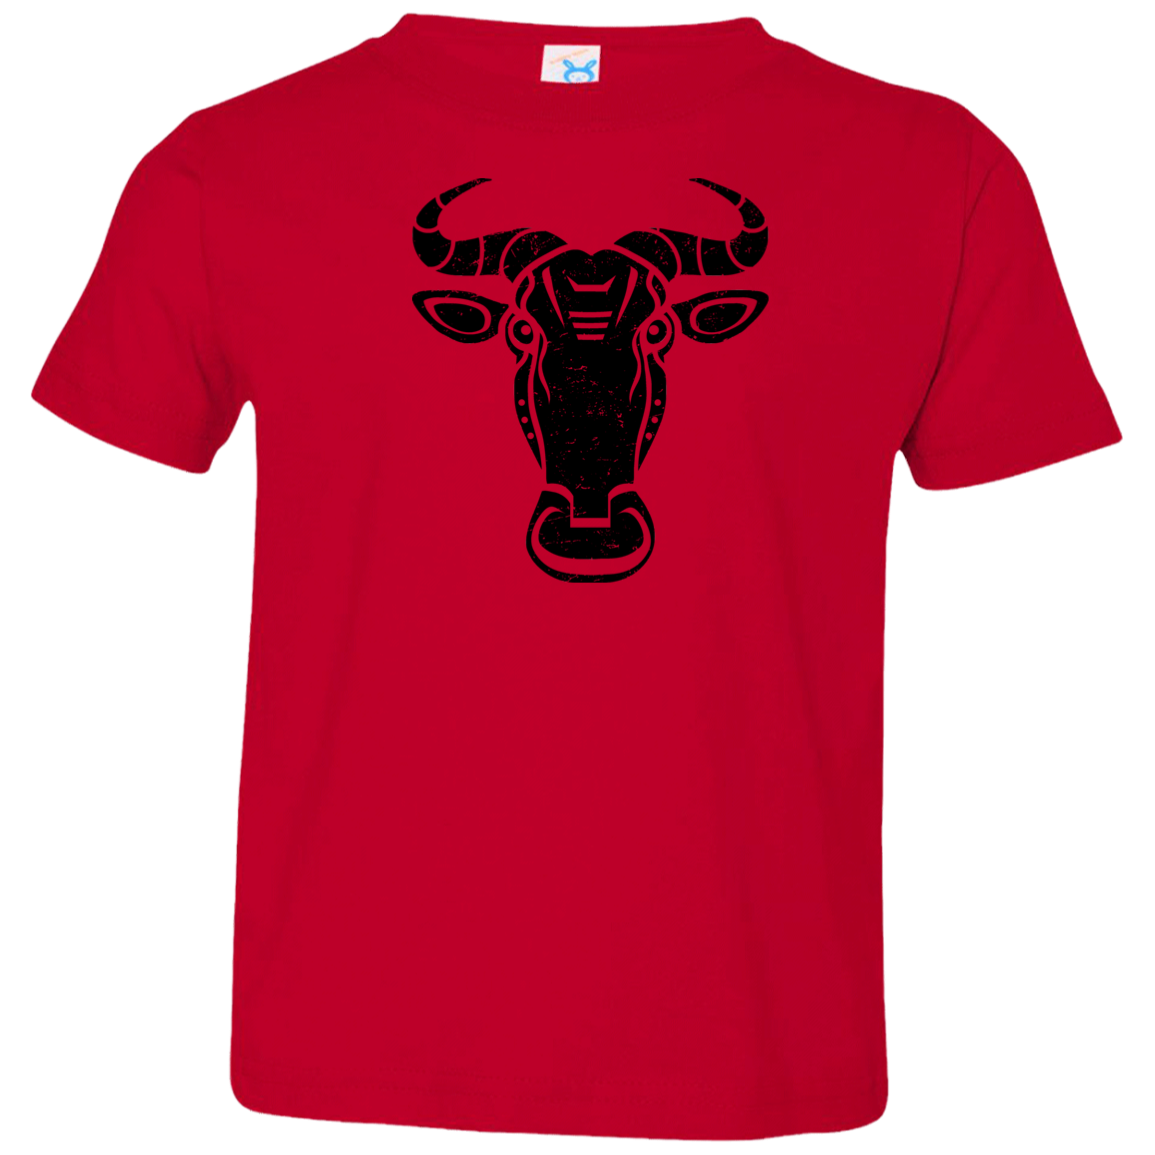 Black Distressed Emblem T-Shirt for Toddlers (Wildebeest/Brute)